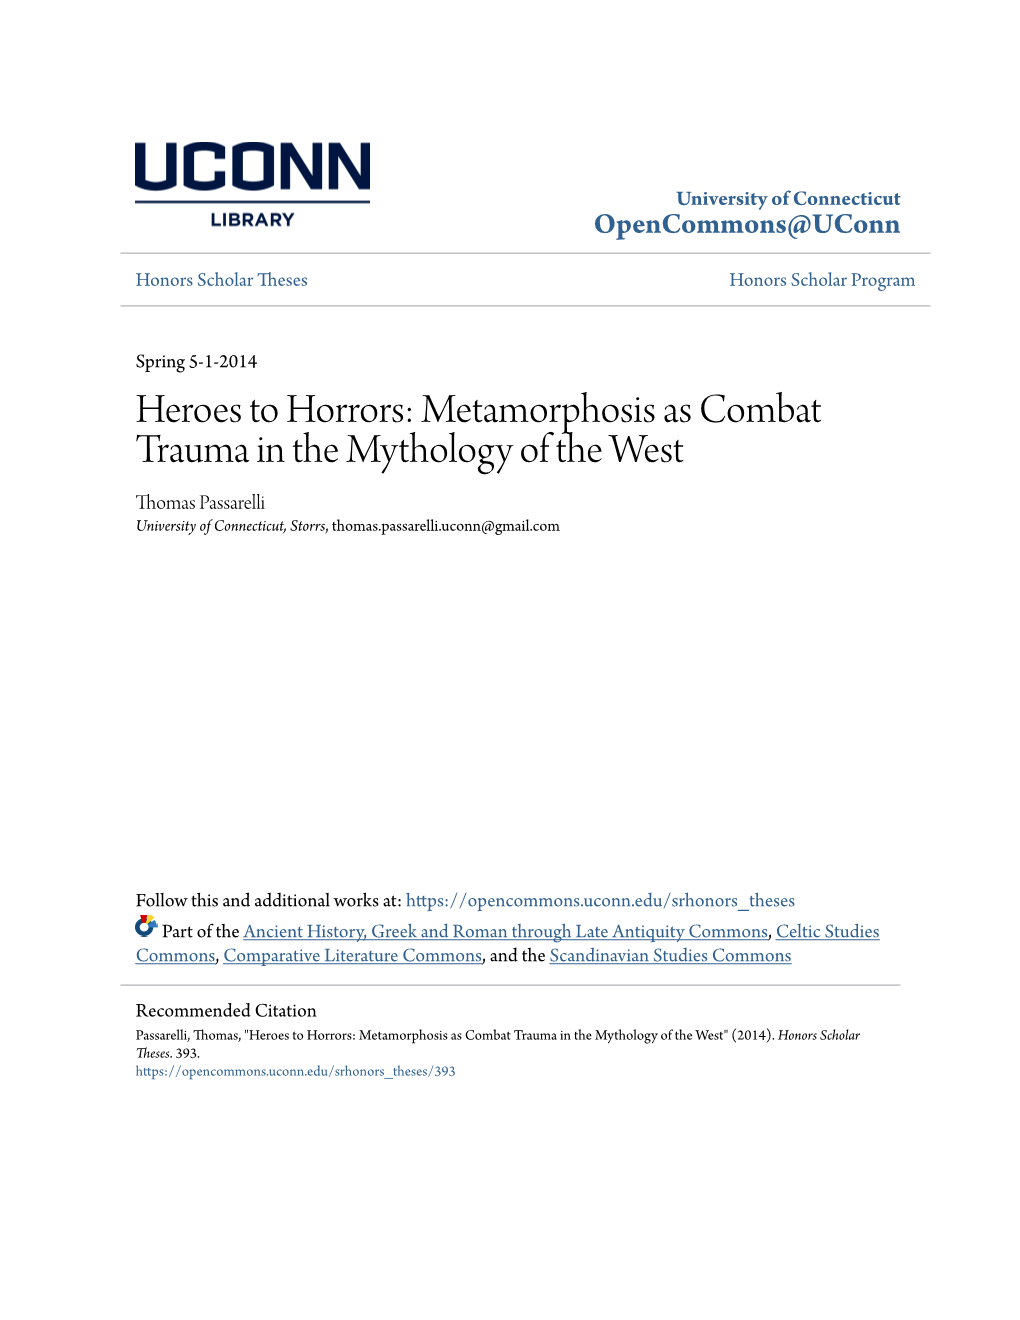 Metamorphosis As Combat Trauma in the Mythology of the West Thomas Passarelli University of Connecticut, Storrs, Thomas.Passarelli.Uconn@Gmail.Com